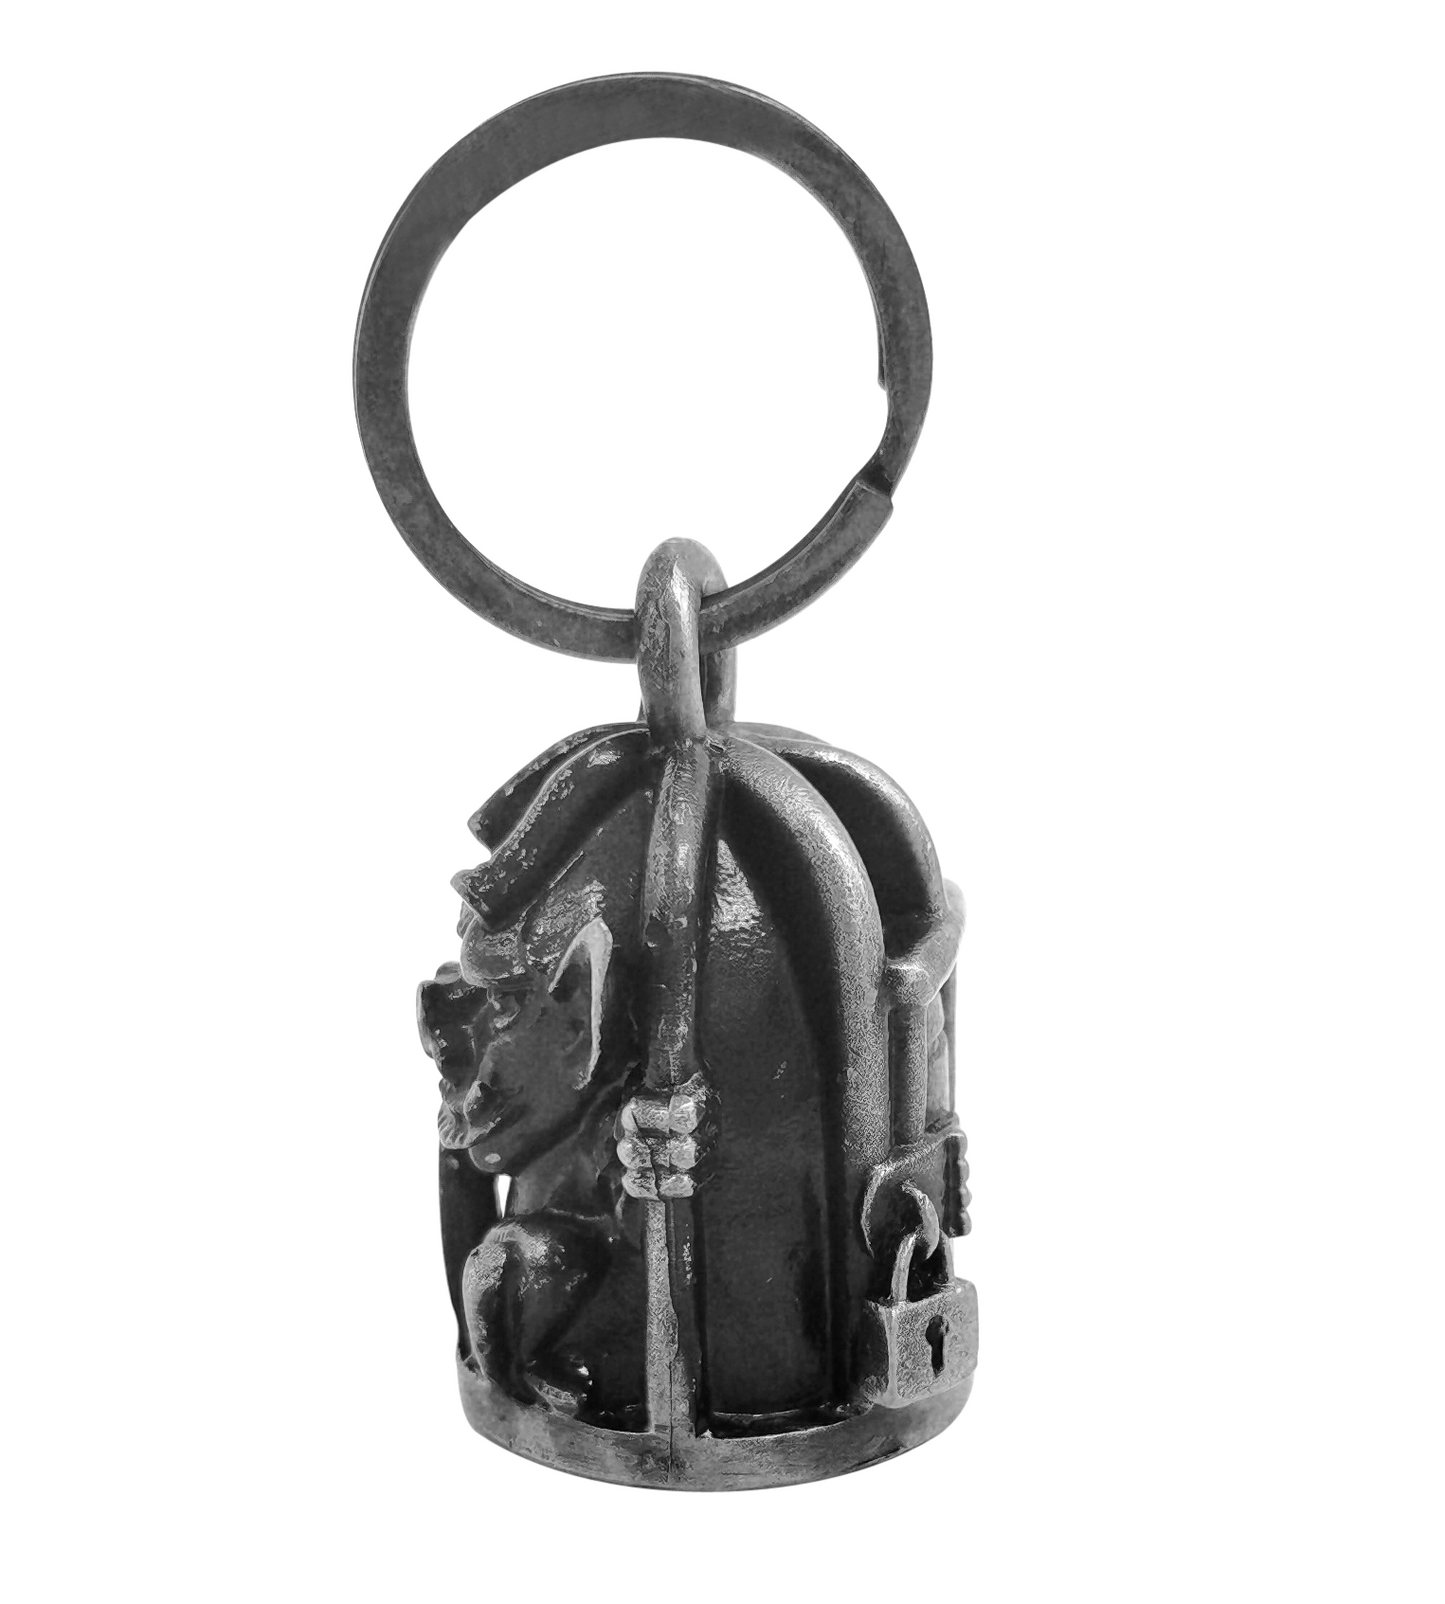 Caged Gargoyle Motorcycle Bell